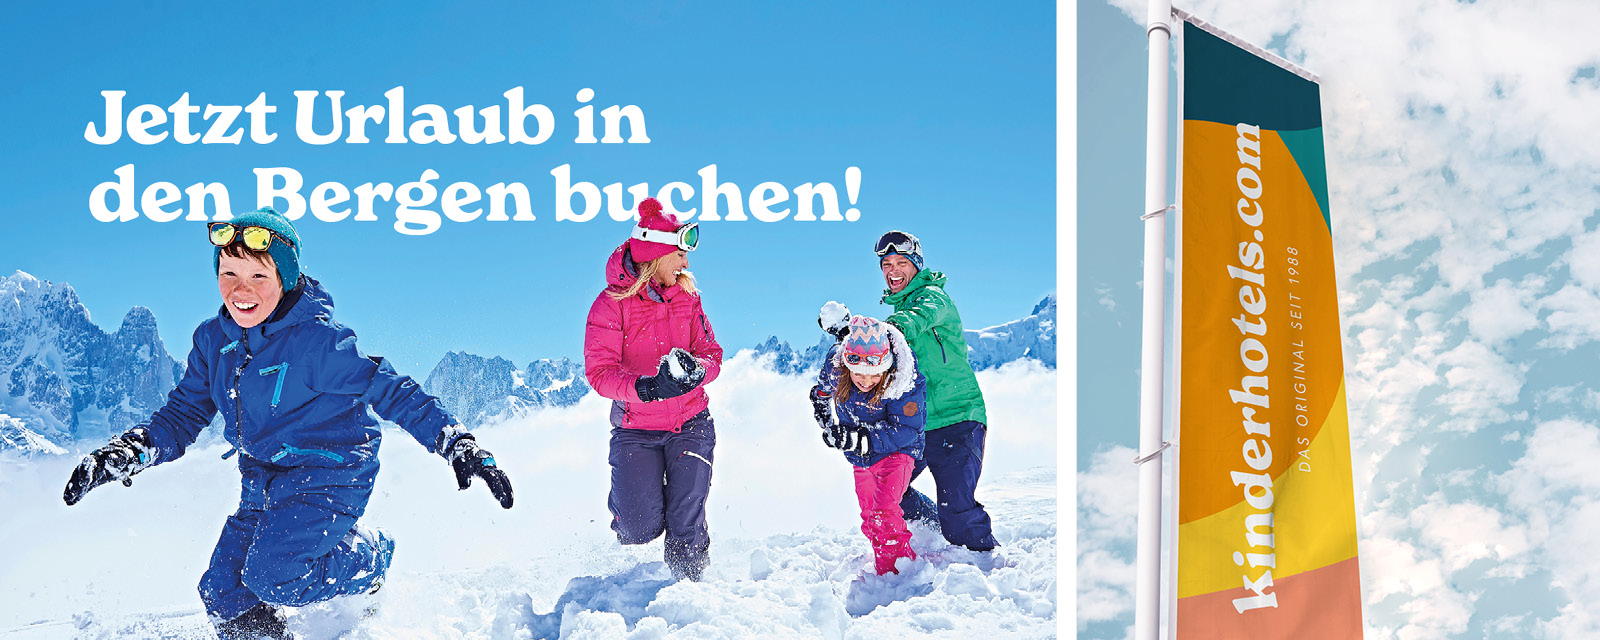 A banner advertising Kinderhotels, a ski resort in bergen buch.